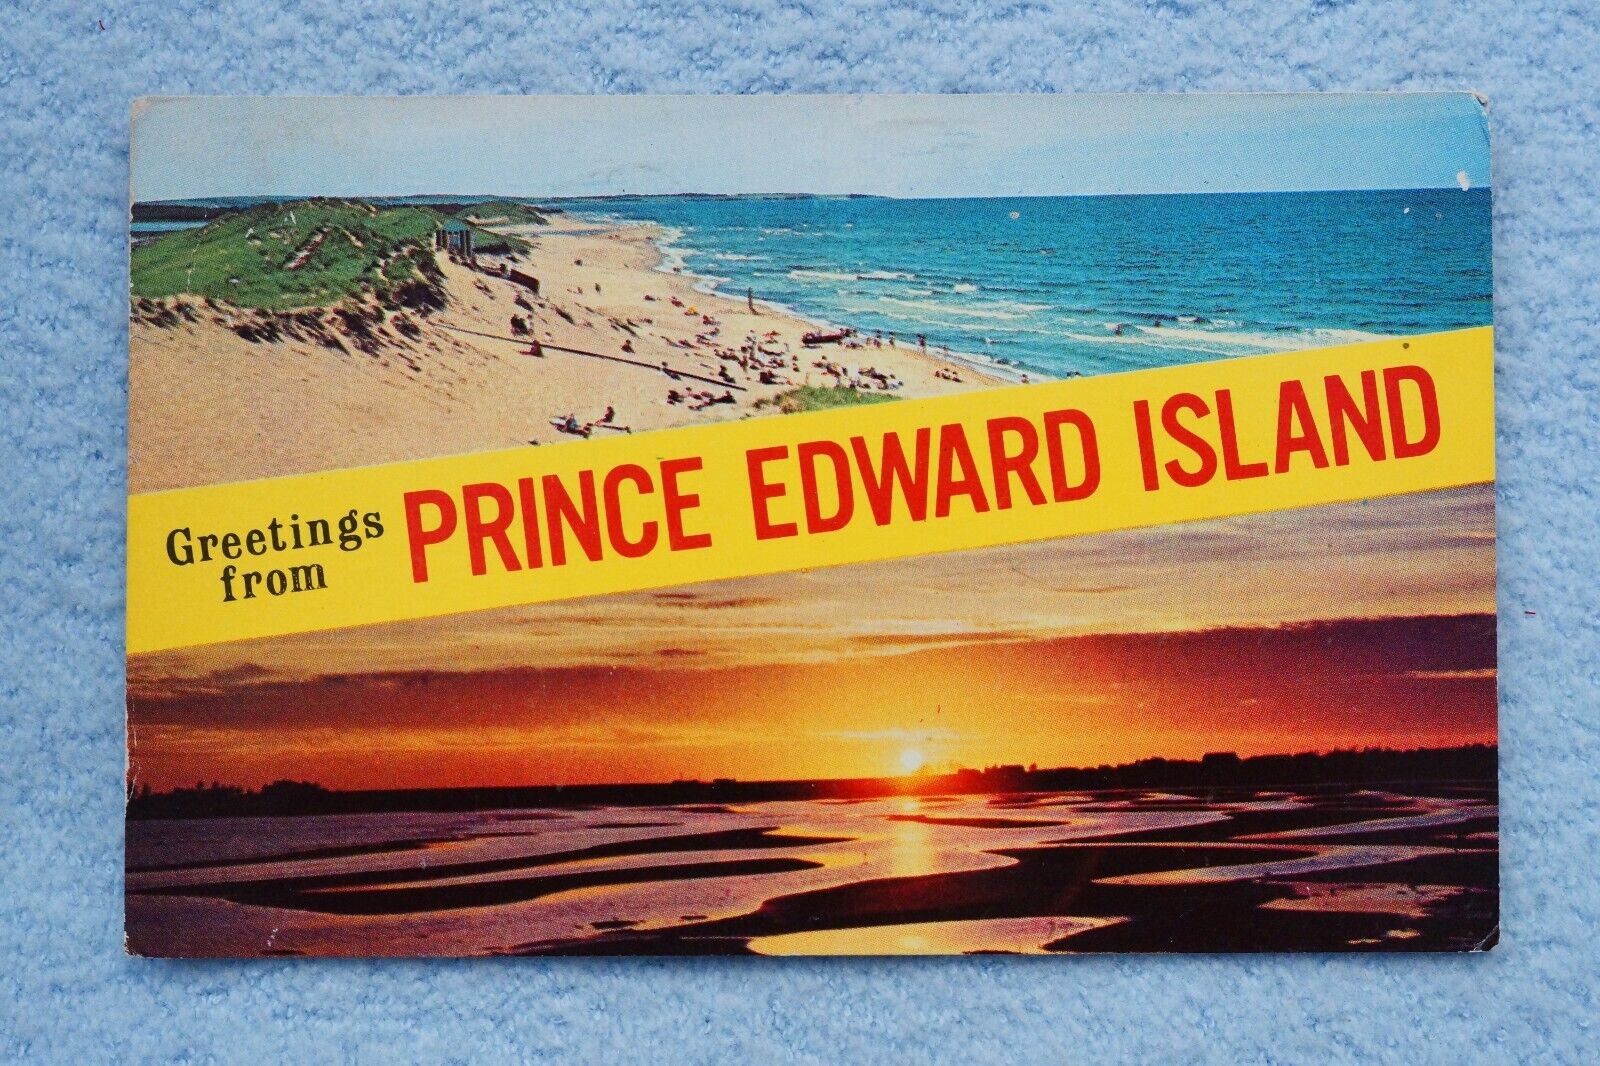 Greetings from Prince Edward Island